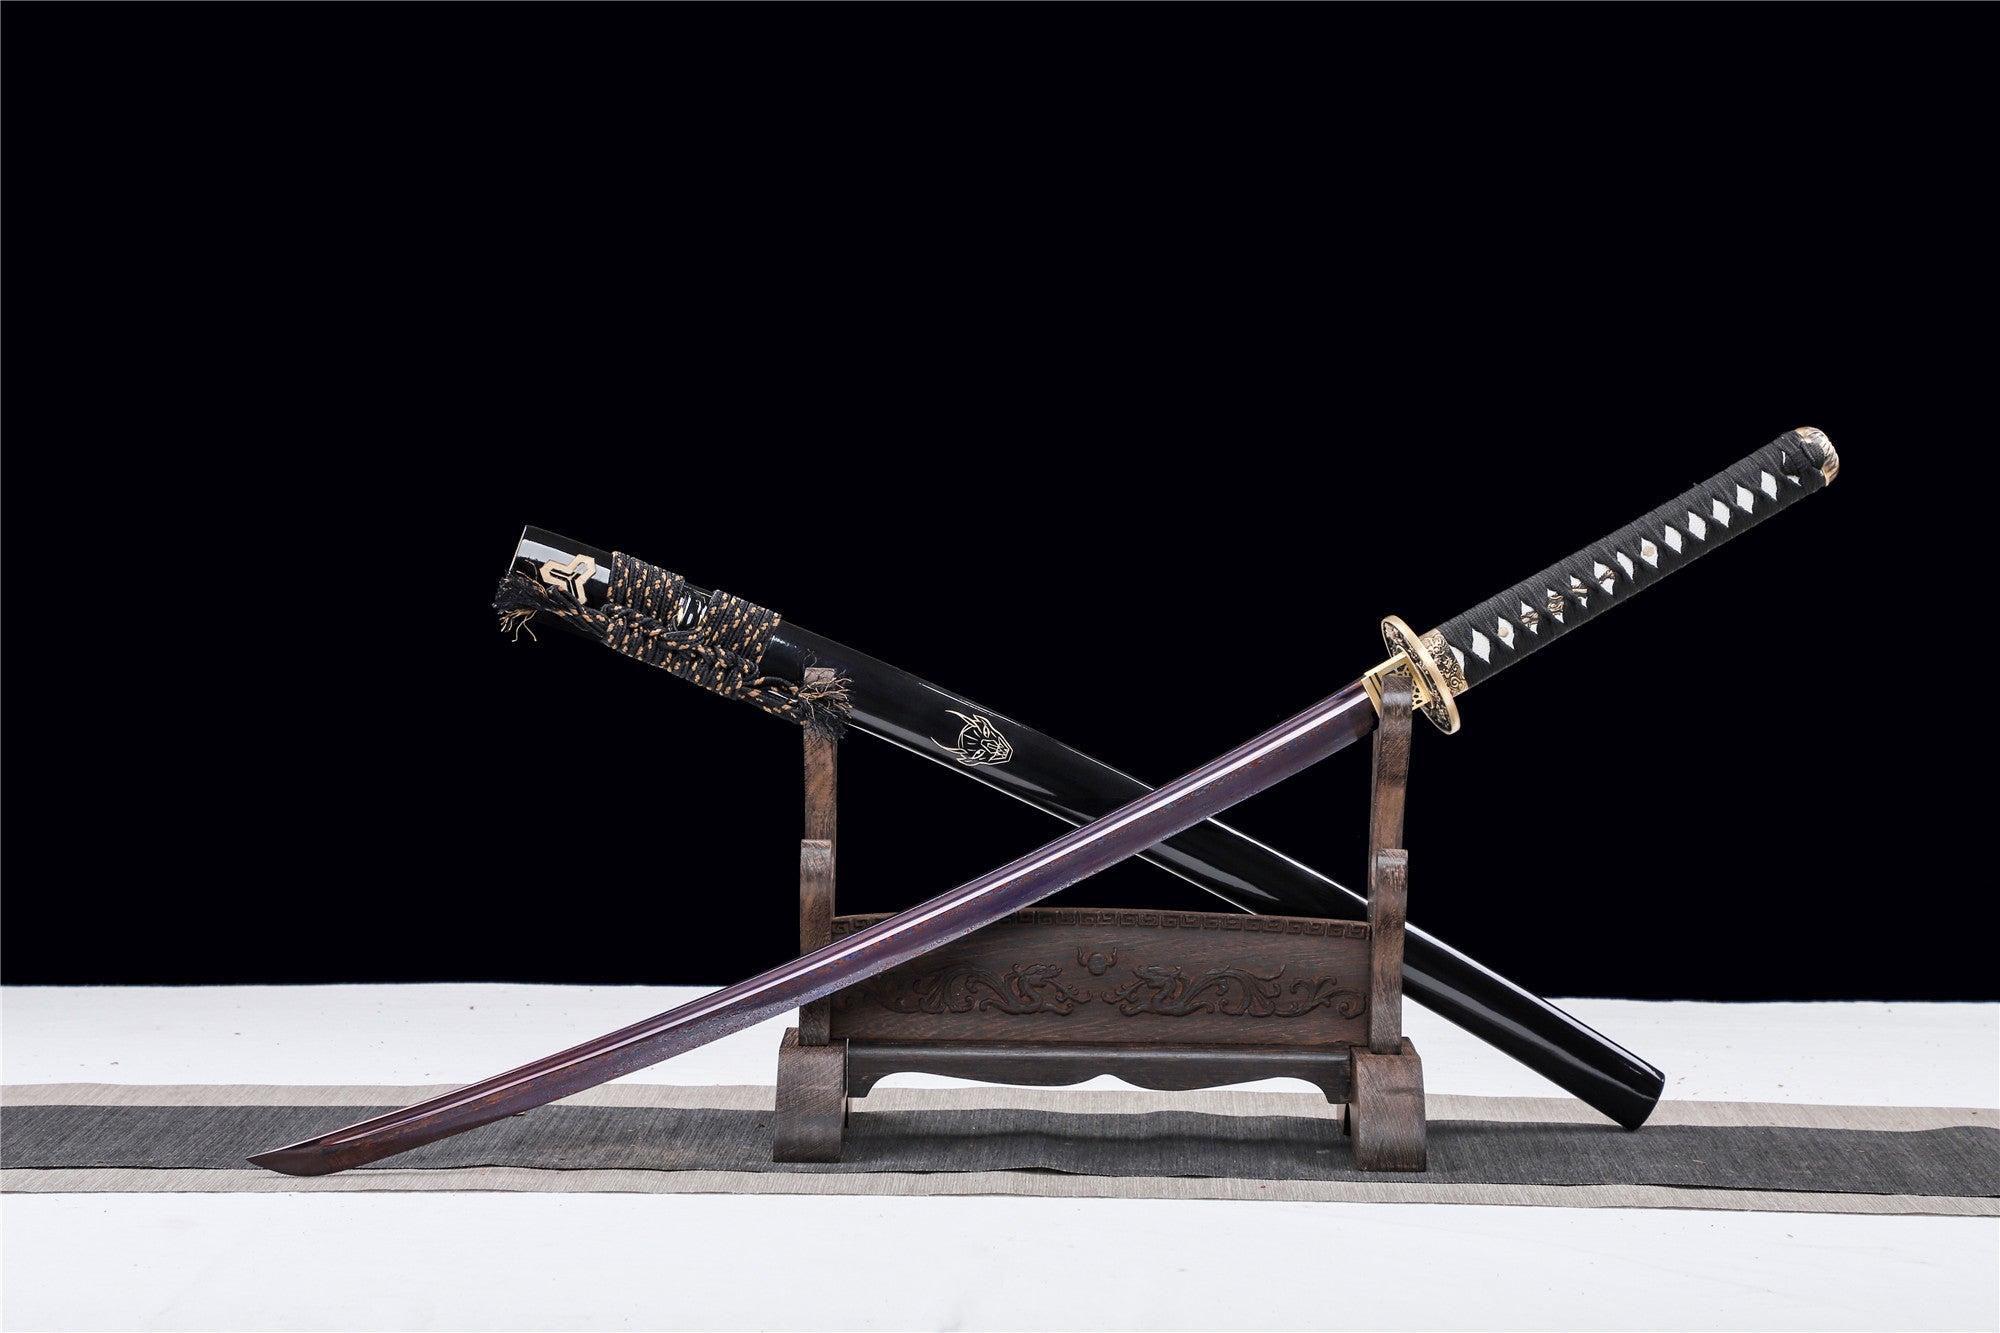 Demon Katana Sword,Devil Series,Japanese Samurai Sword,Real Handmade Katana,Damascus Steel